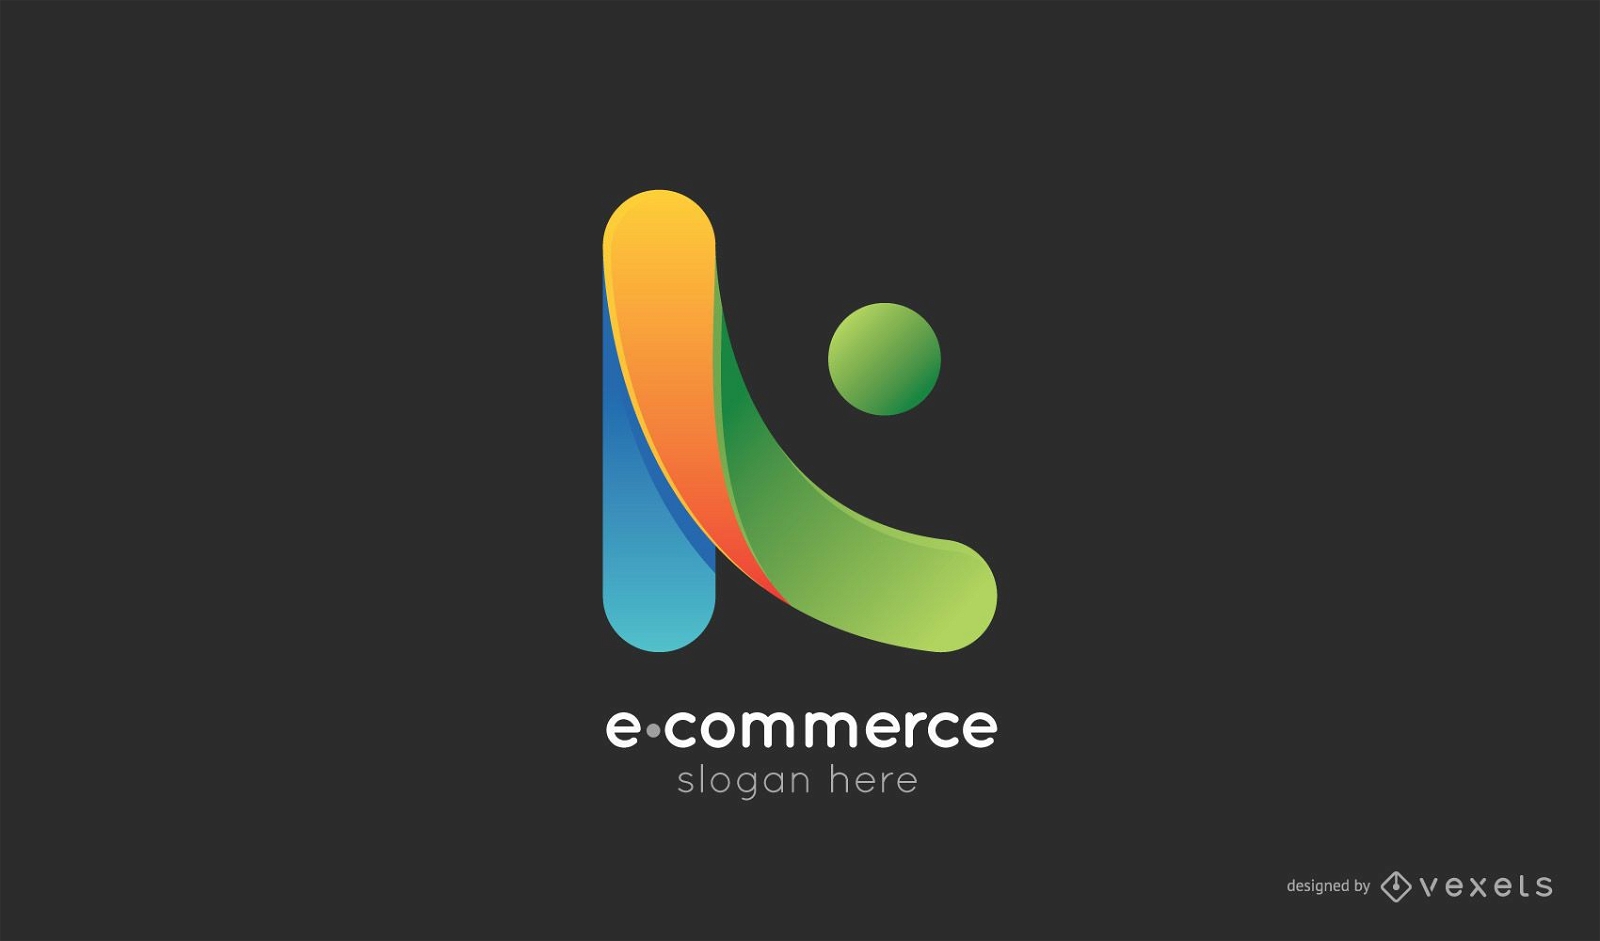 Ecommerce logo - Online Tech shop logo - E modern logo - UpLabs